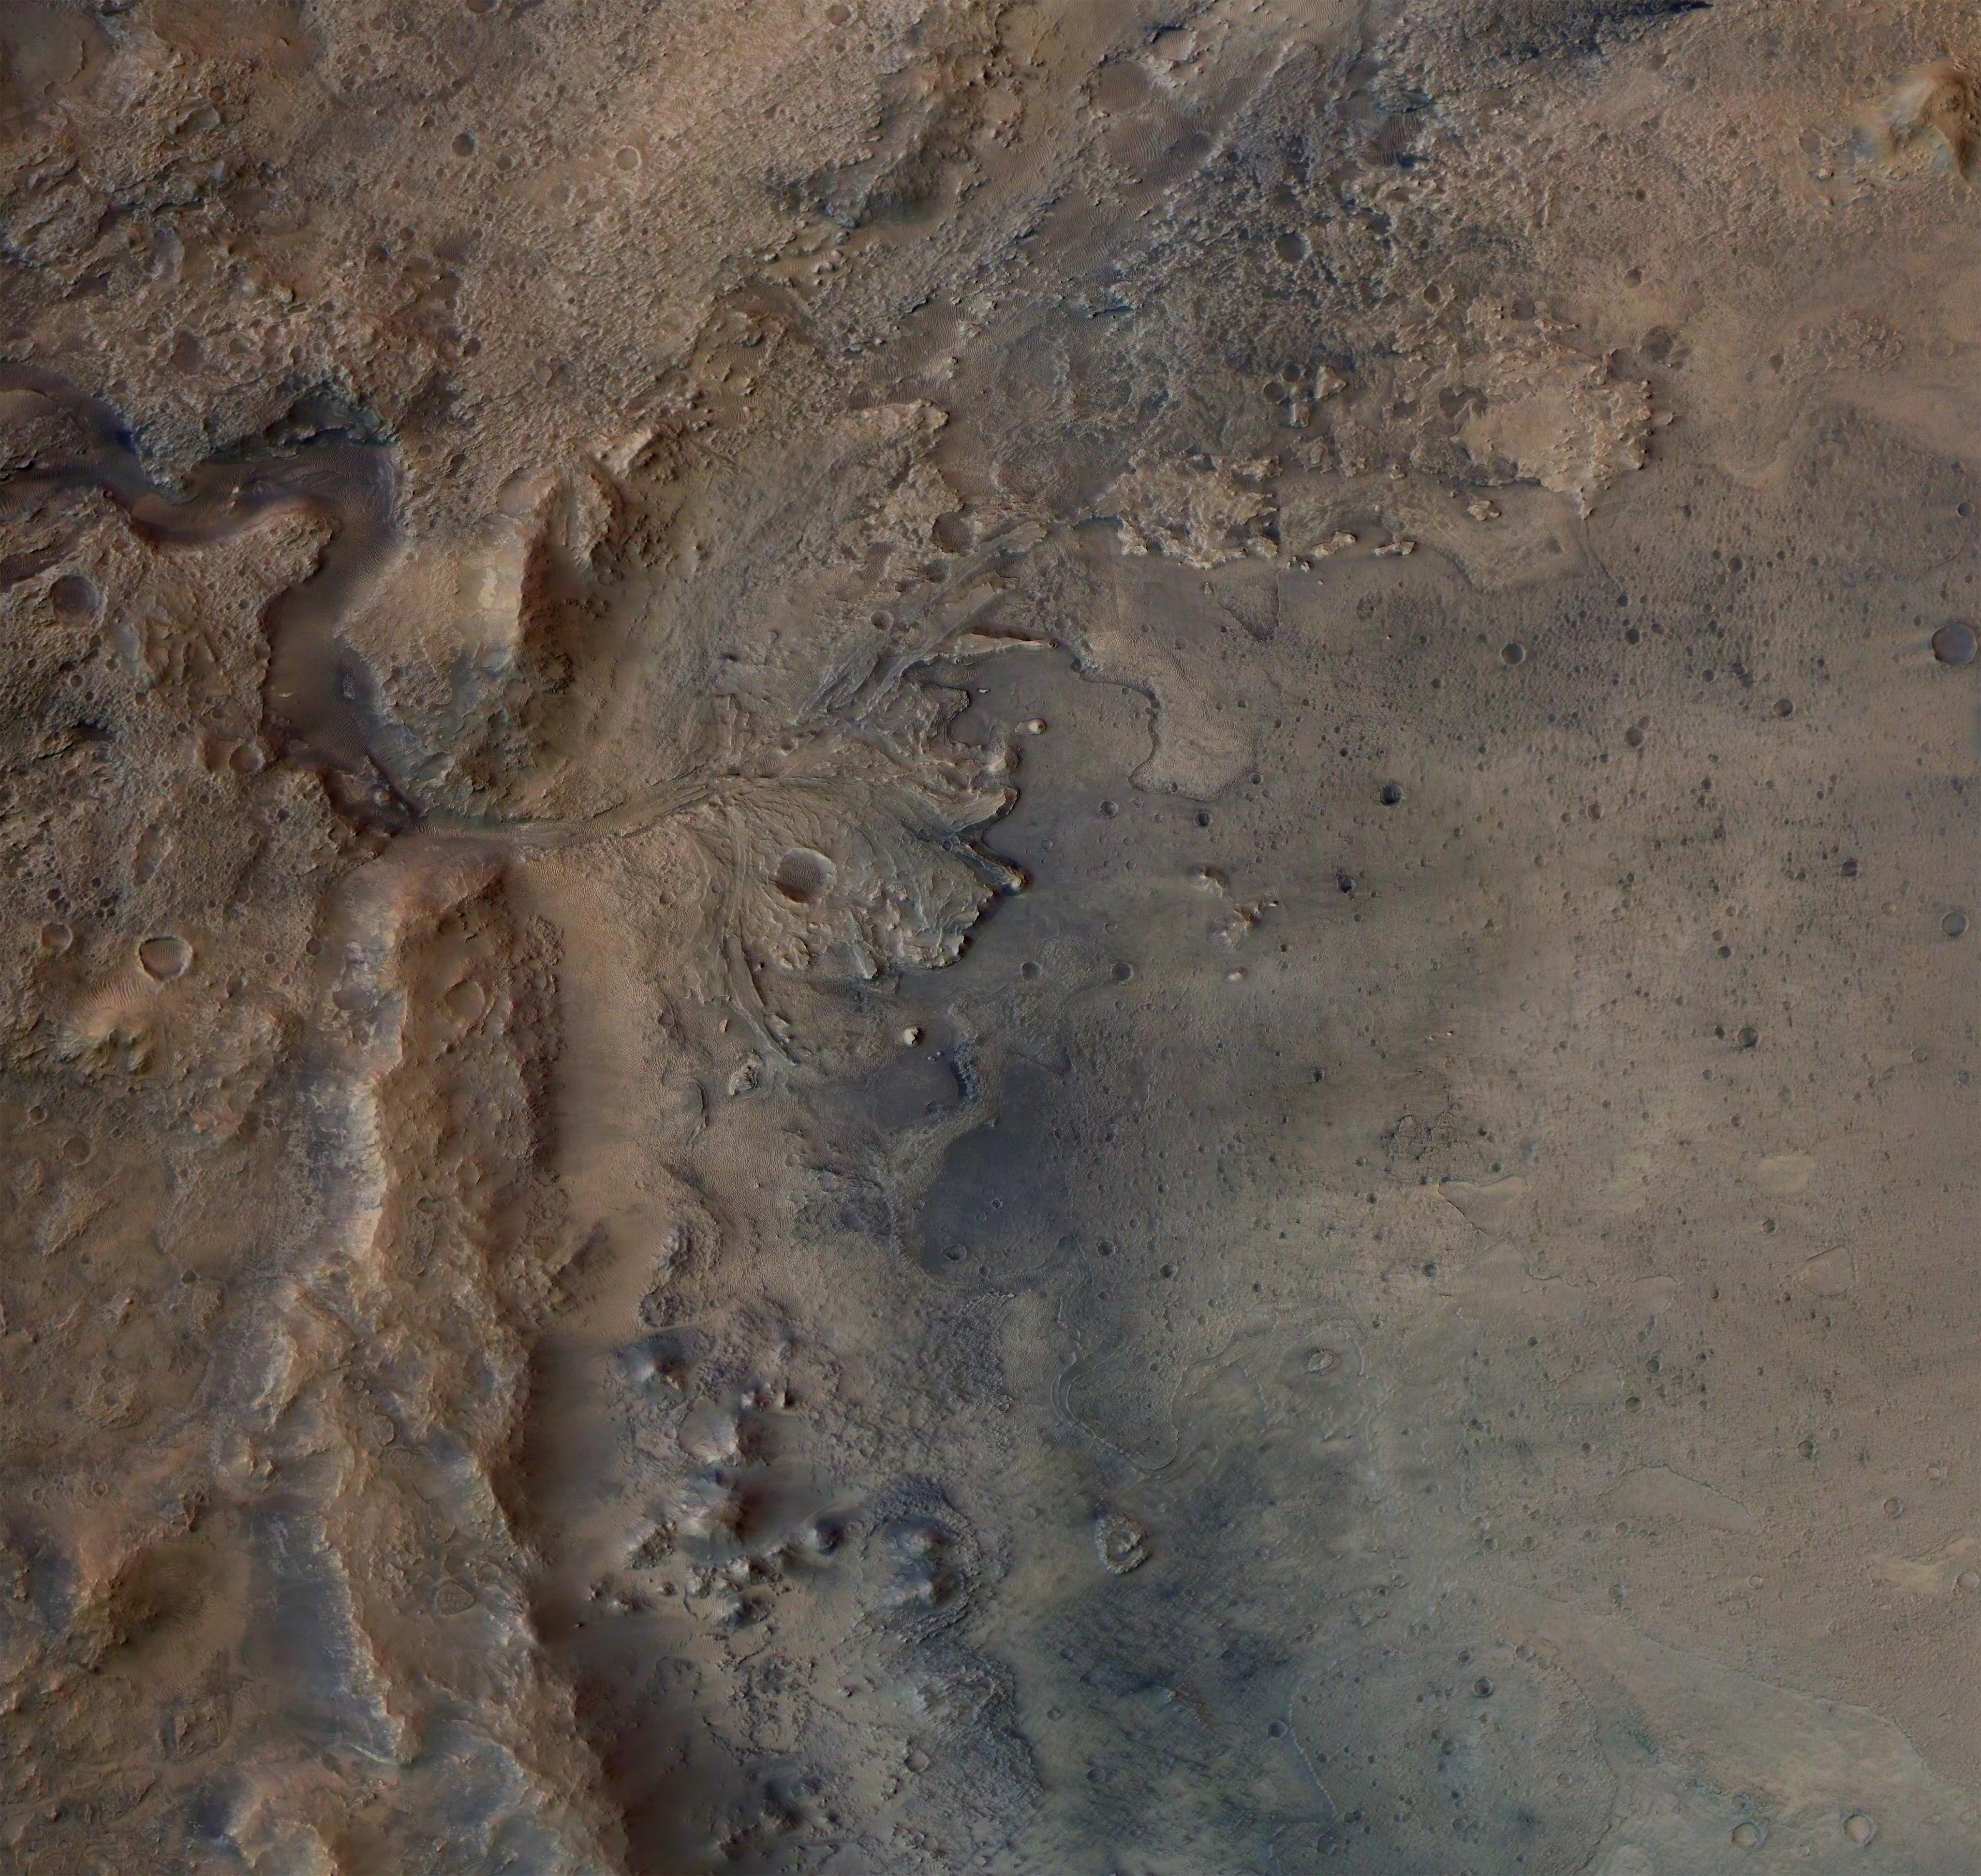 PIA24096: Jezero Crater as Seen by ESA's Mars Express Orbiter